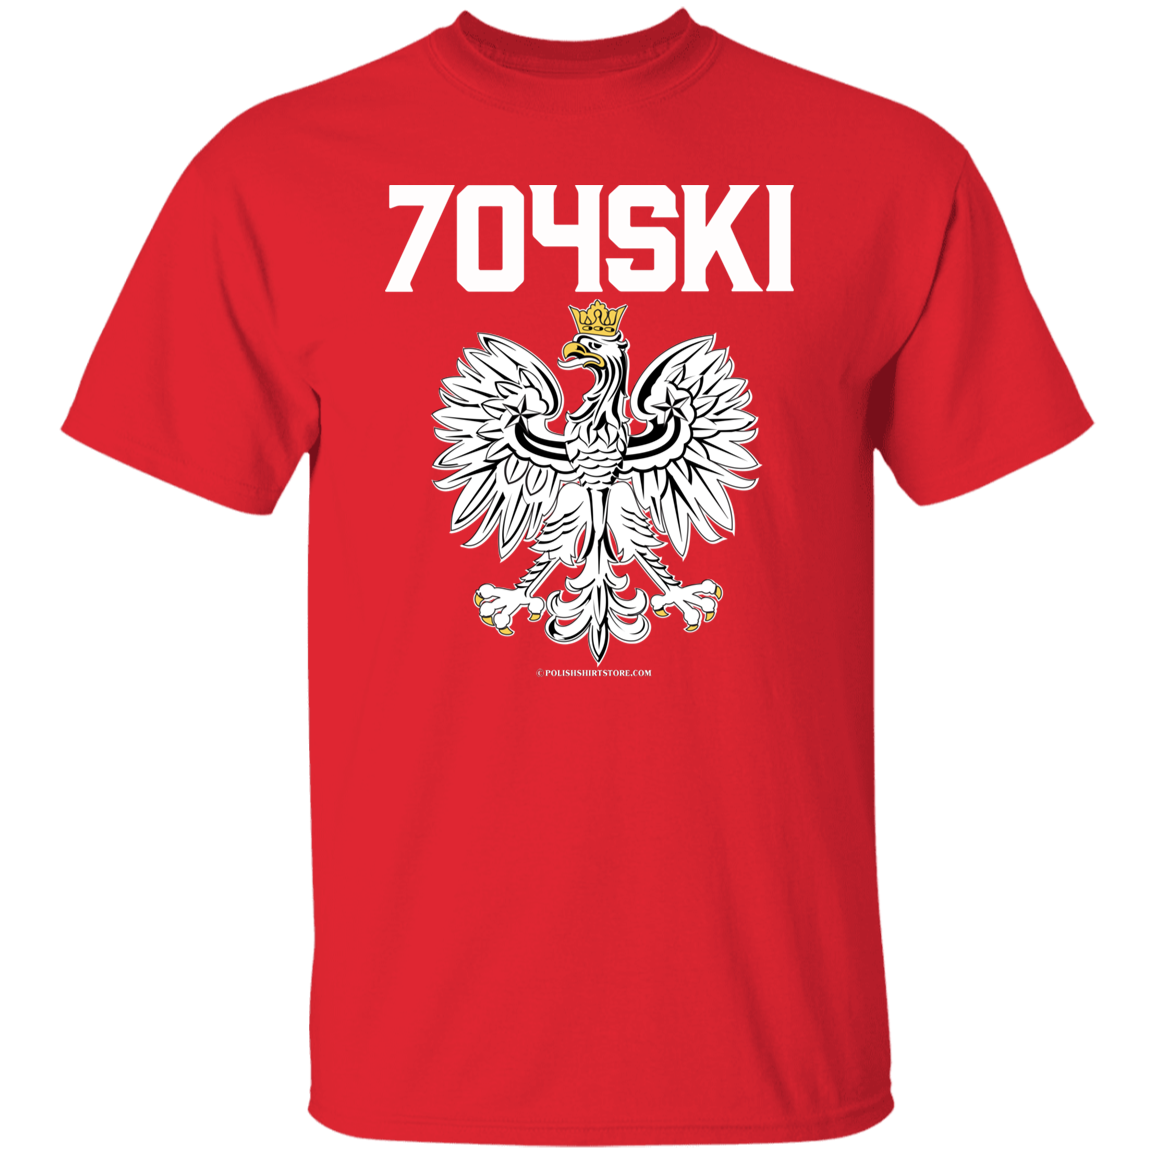 704SKI Apparel CustomCat G500 5.3 oz. T-Shirt Red S